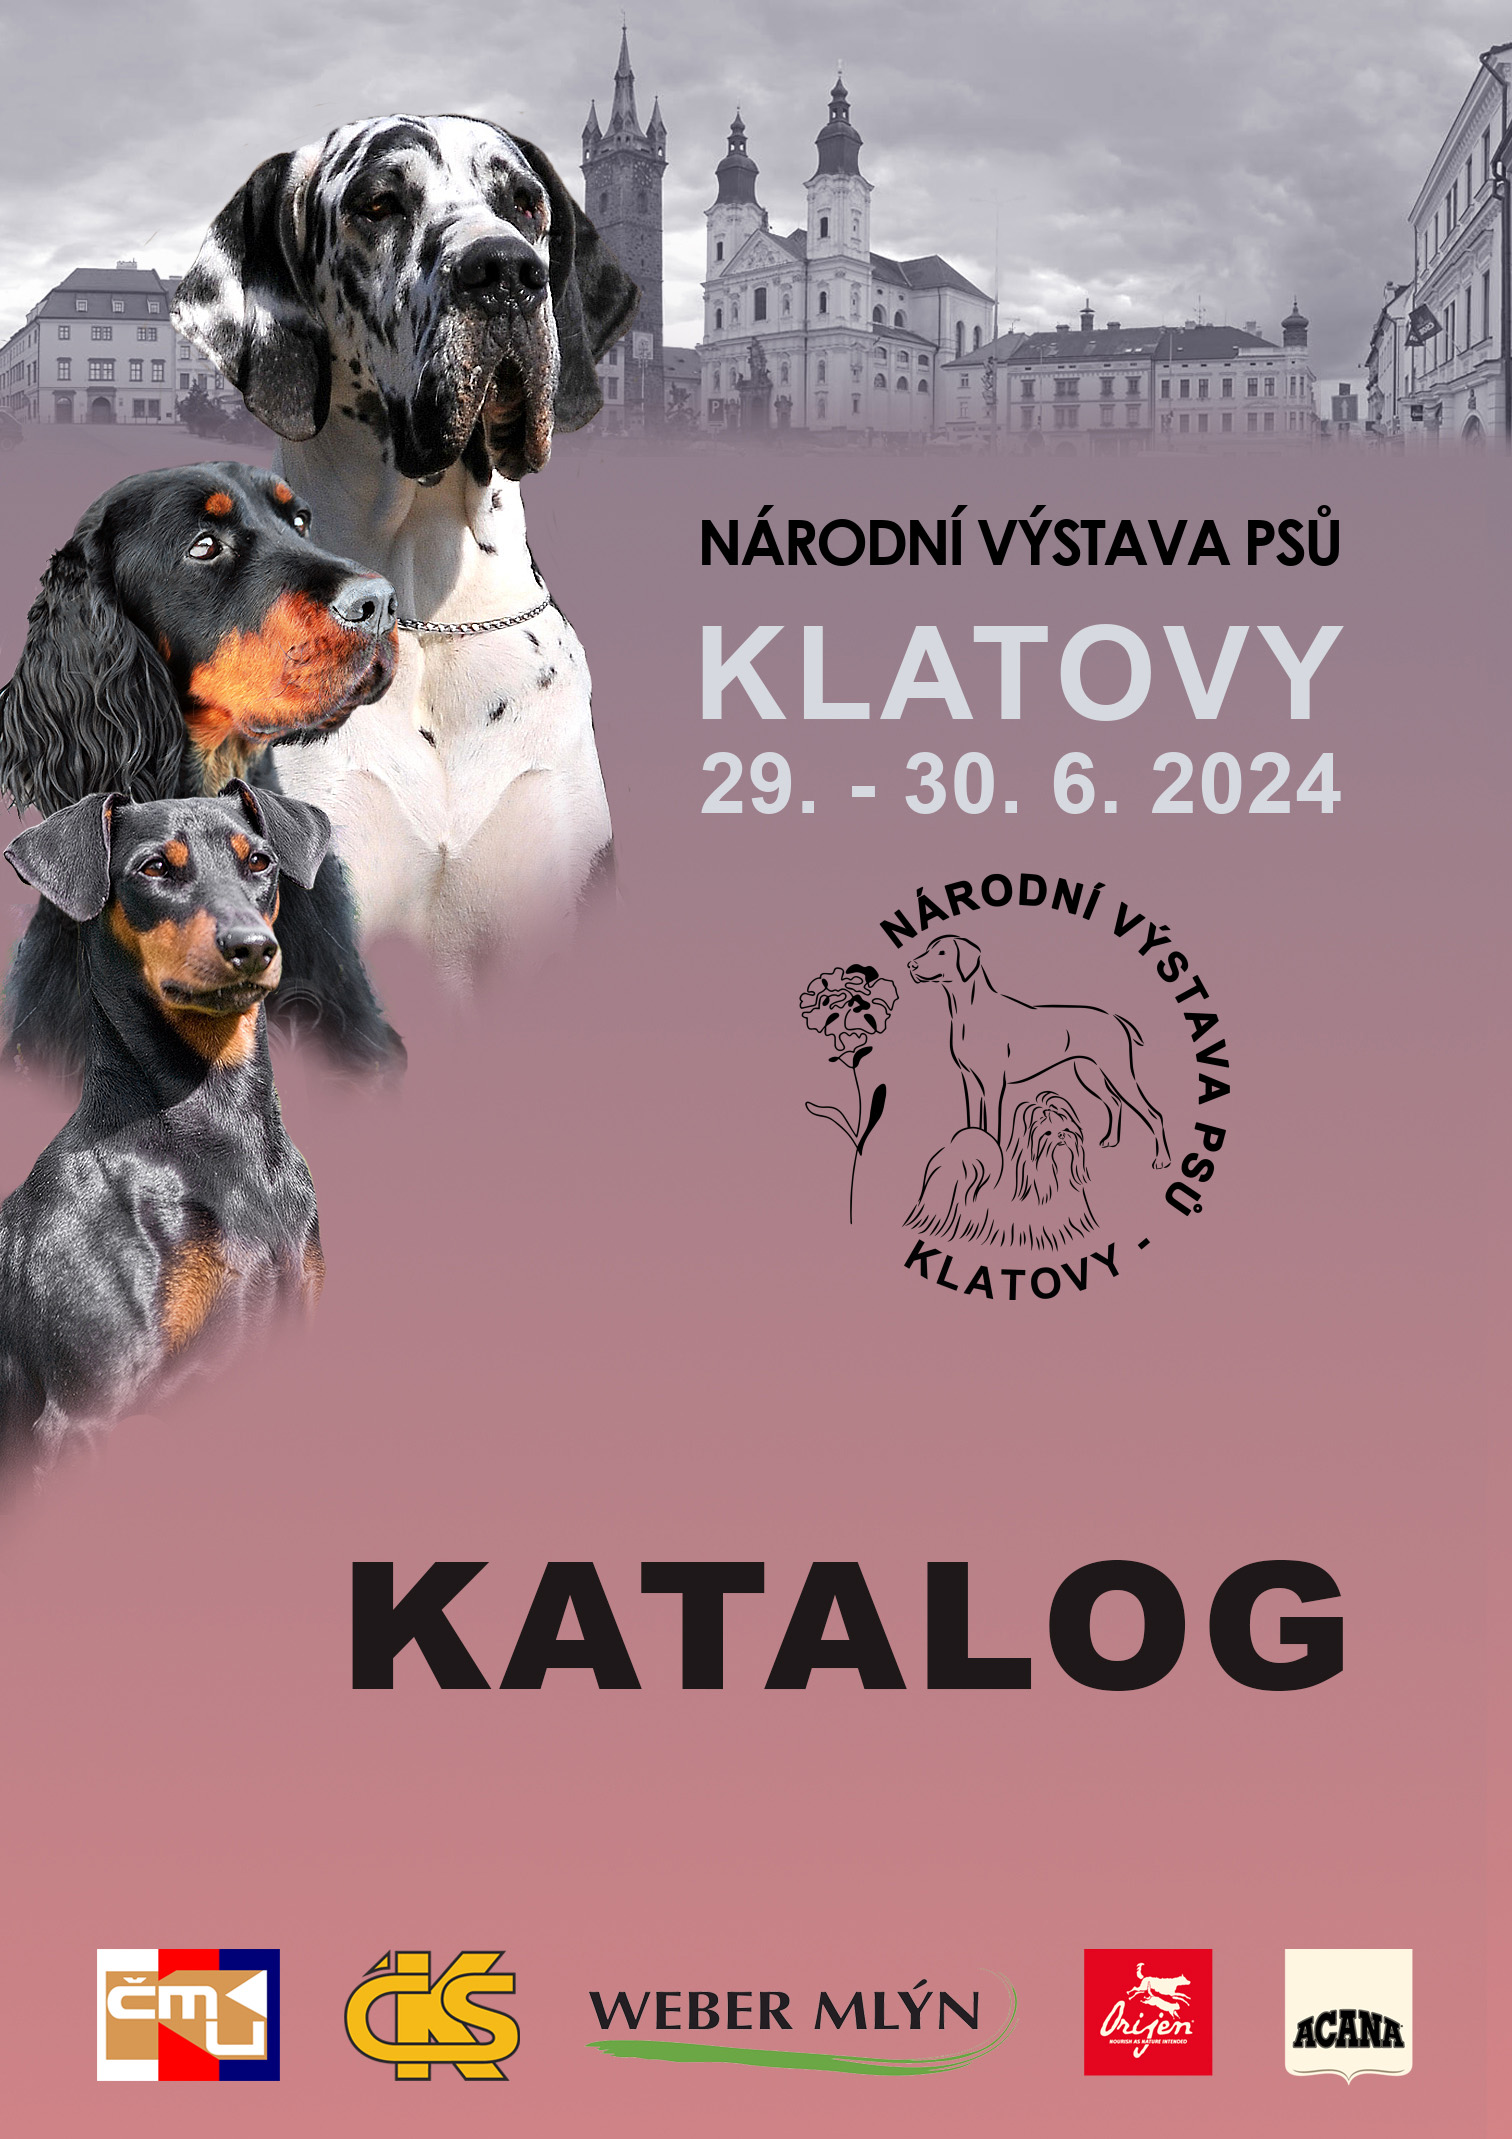 NVP Klatovy 2024 - katalog